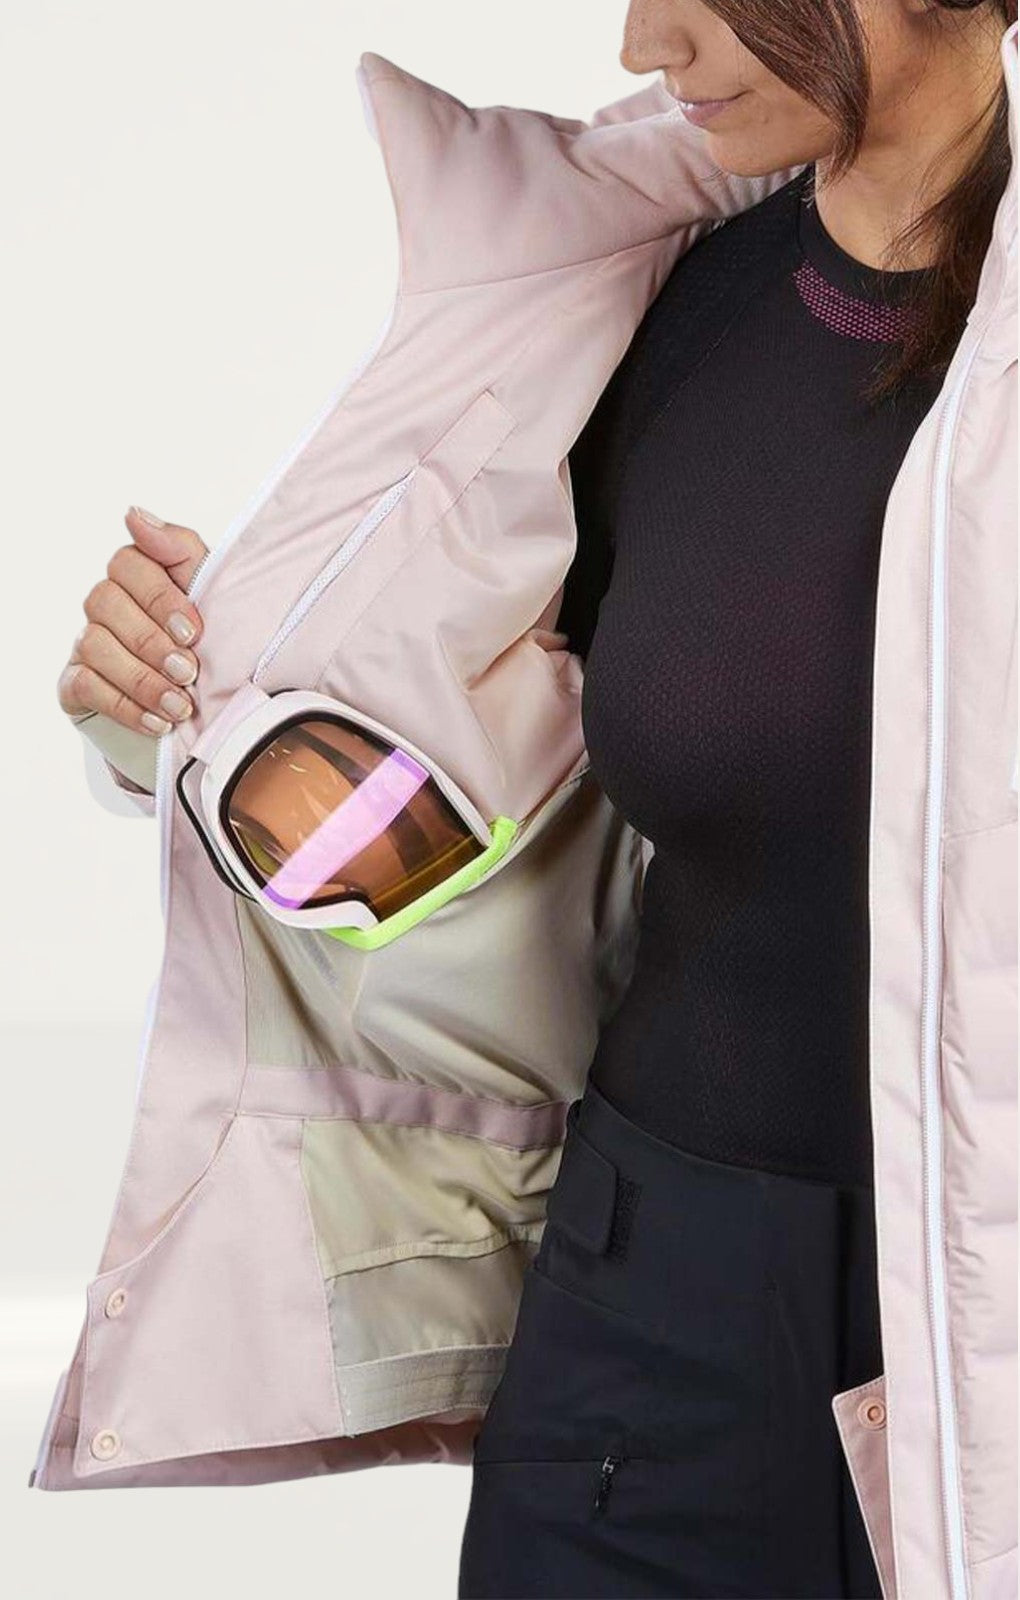 Decathlon Pink Women's Piste Ski Jacket product image